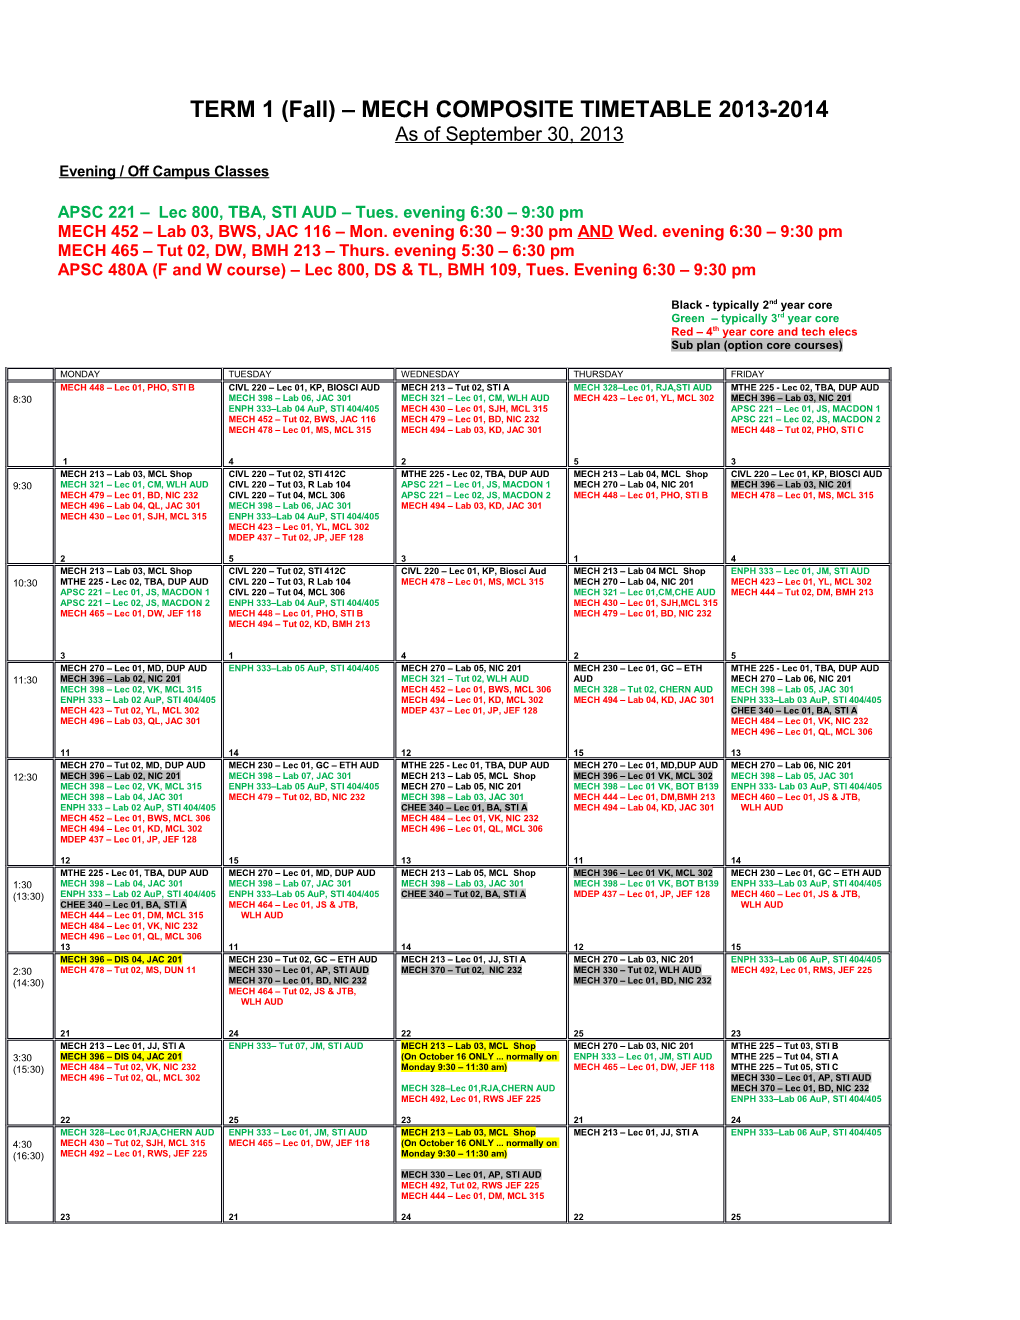 Mechanical Engineering Timetable 1997-98 Term 2